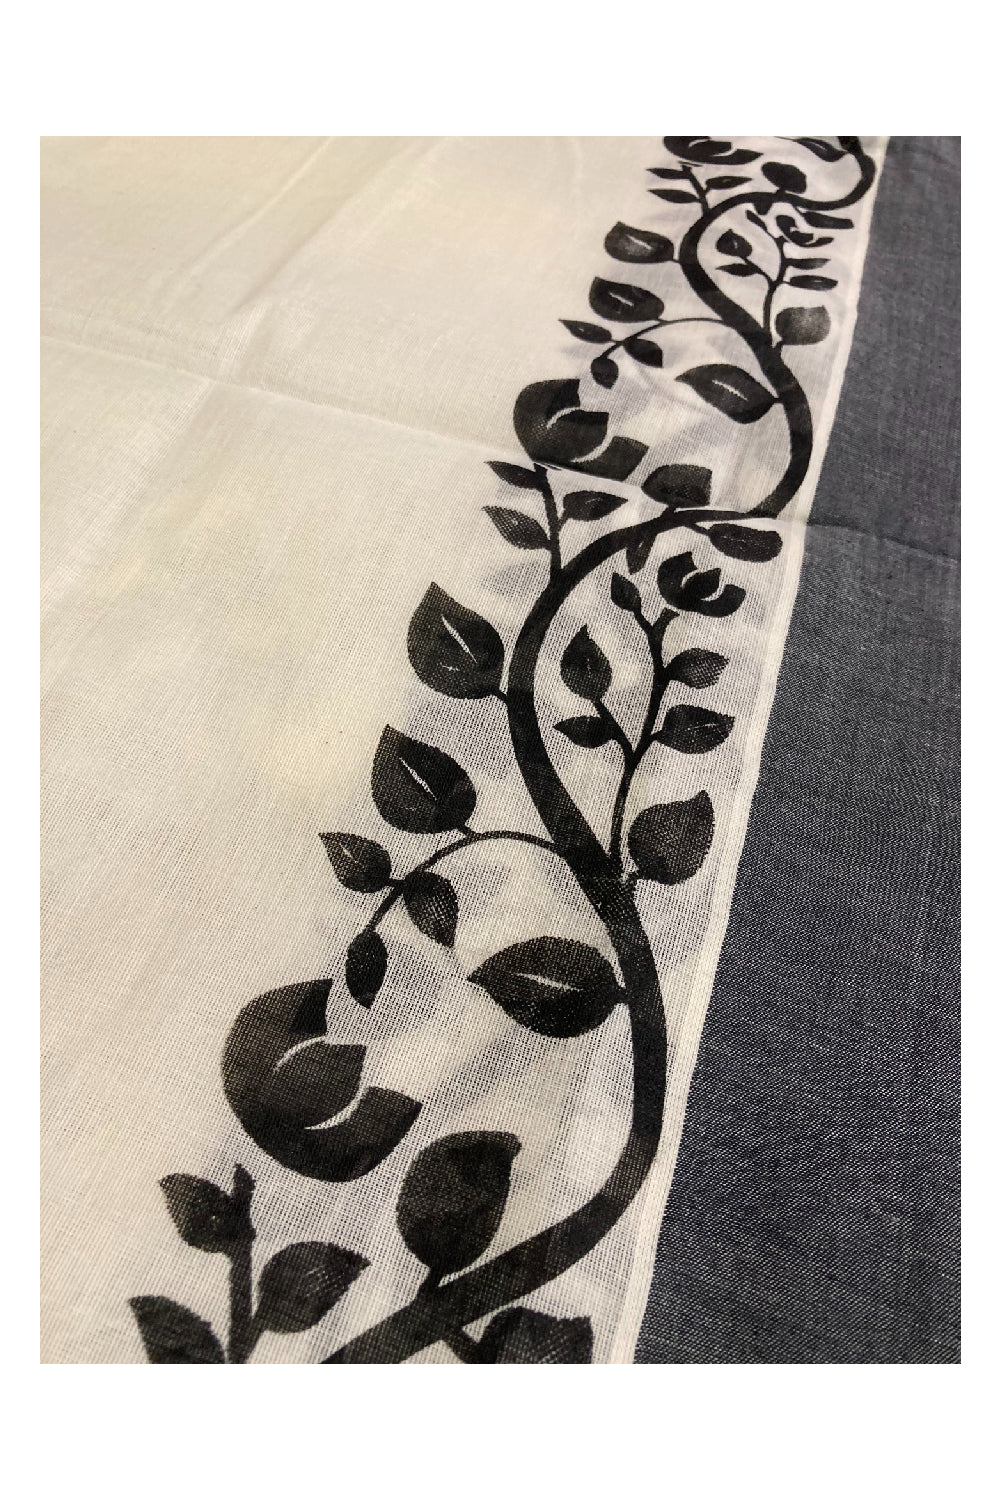 Southloom Original Design Single Set Mundu (Mundum Neriyathum) with Black Floral Vines Block Print 2.80 Mtrs